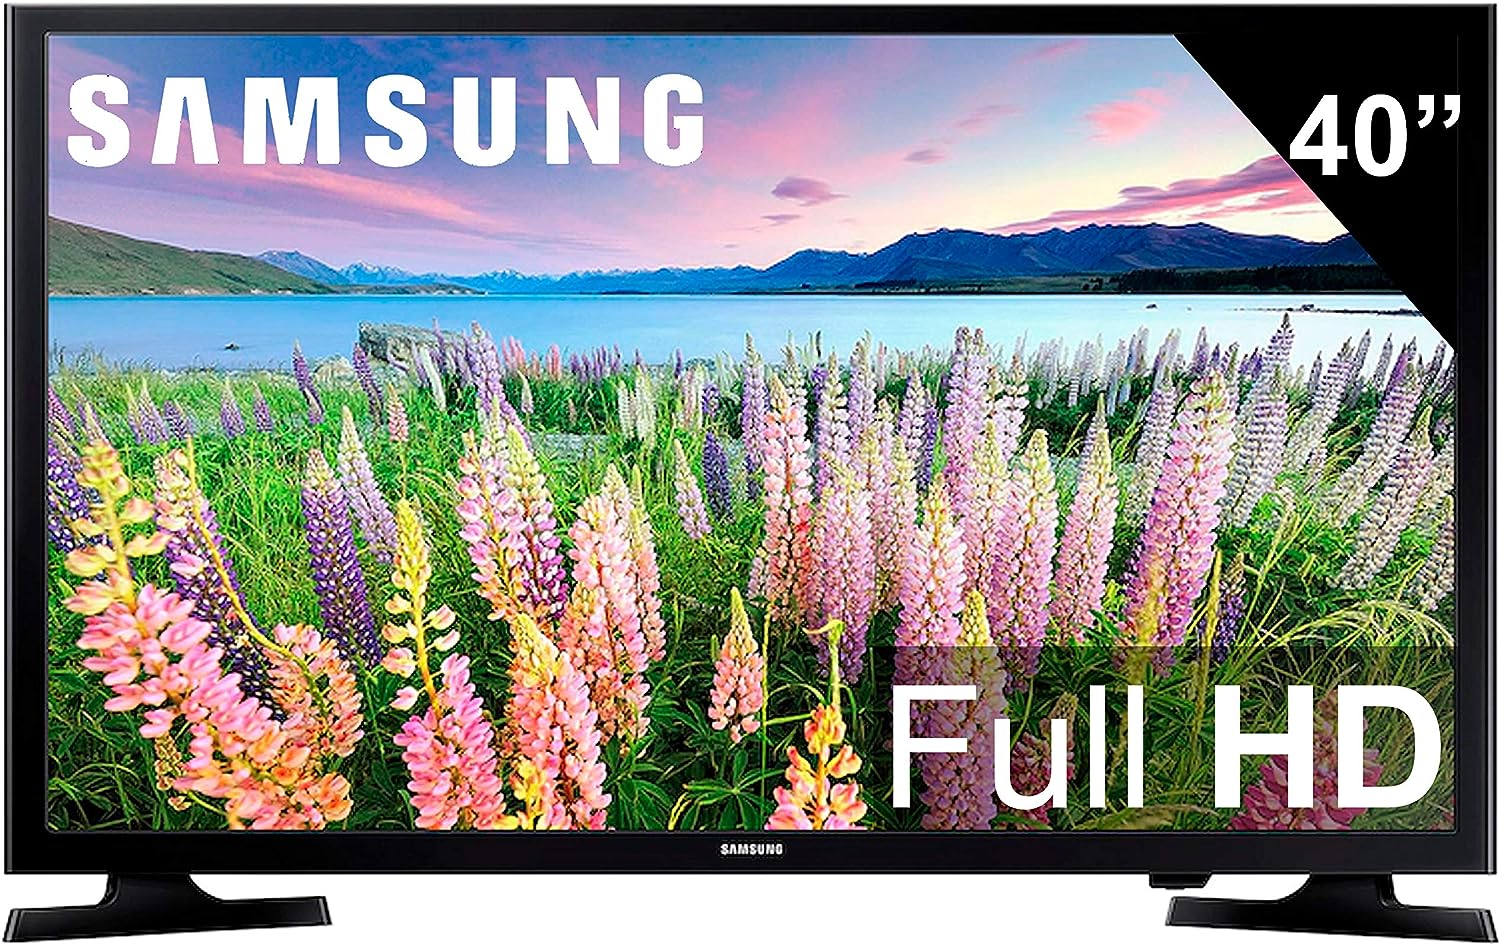 SAMSUNG 40-inch Class LED Smart FHD TV 1080P (UN40N5200AFXZA, 2019 Model), Black - $190